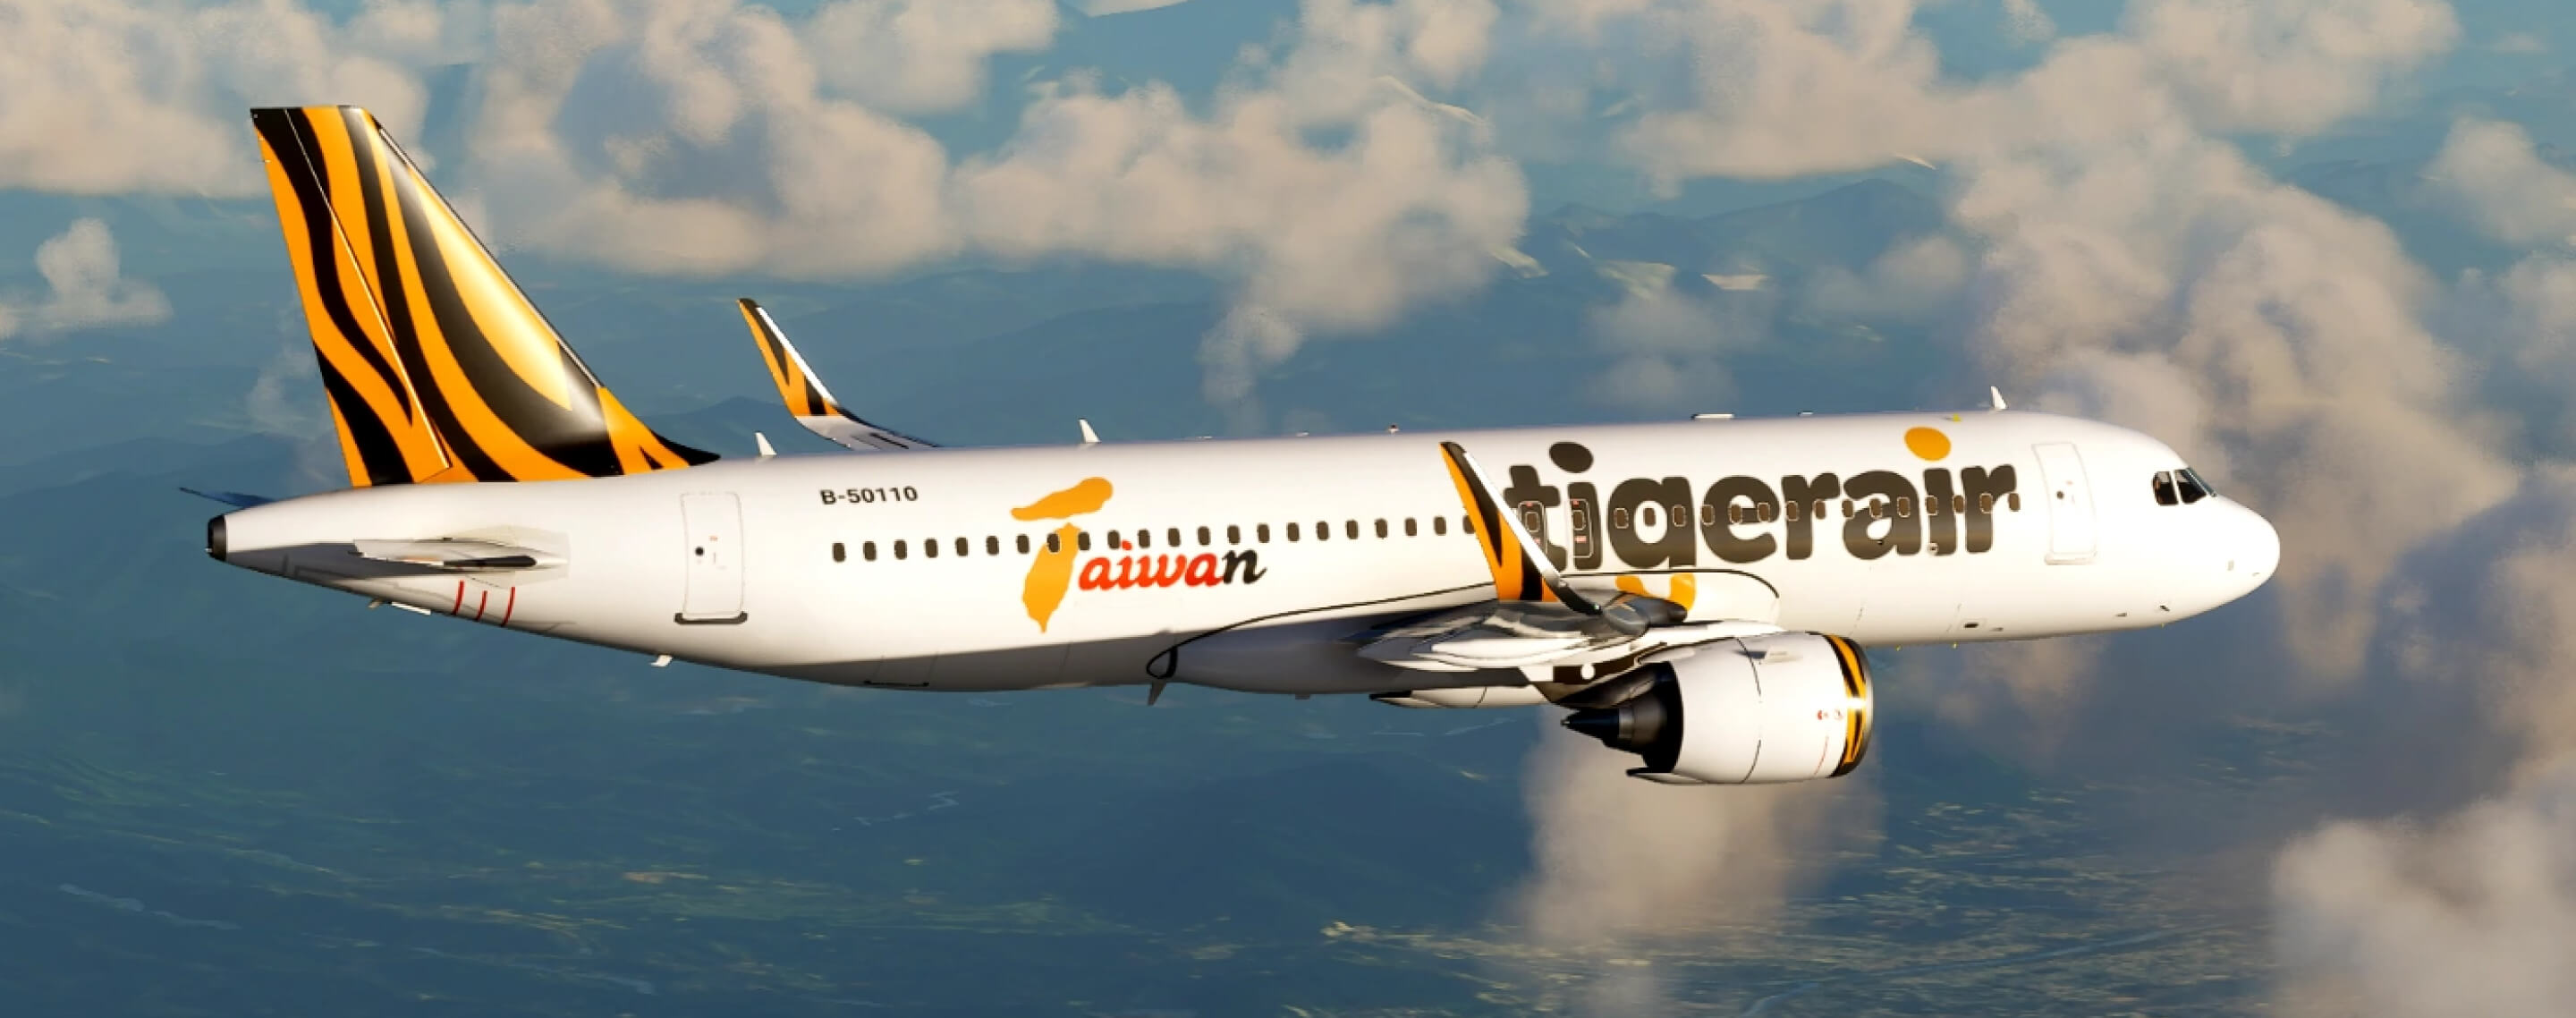 Tigerair aircraft